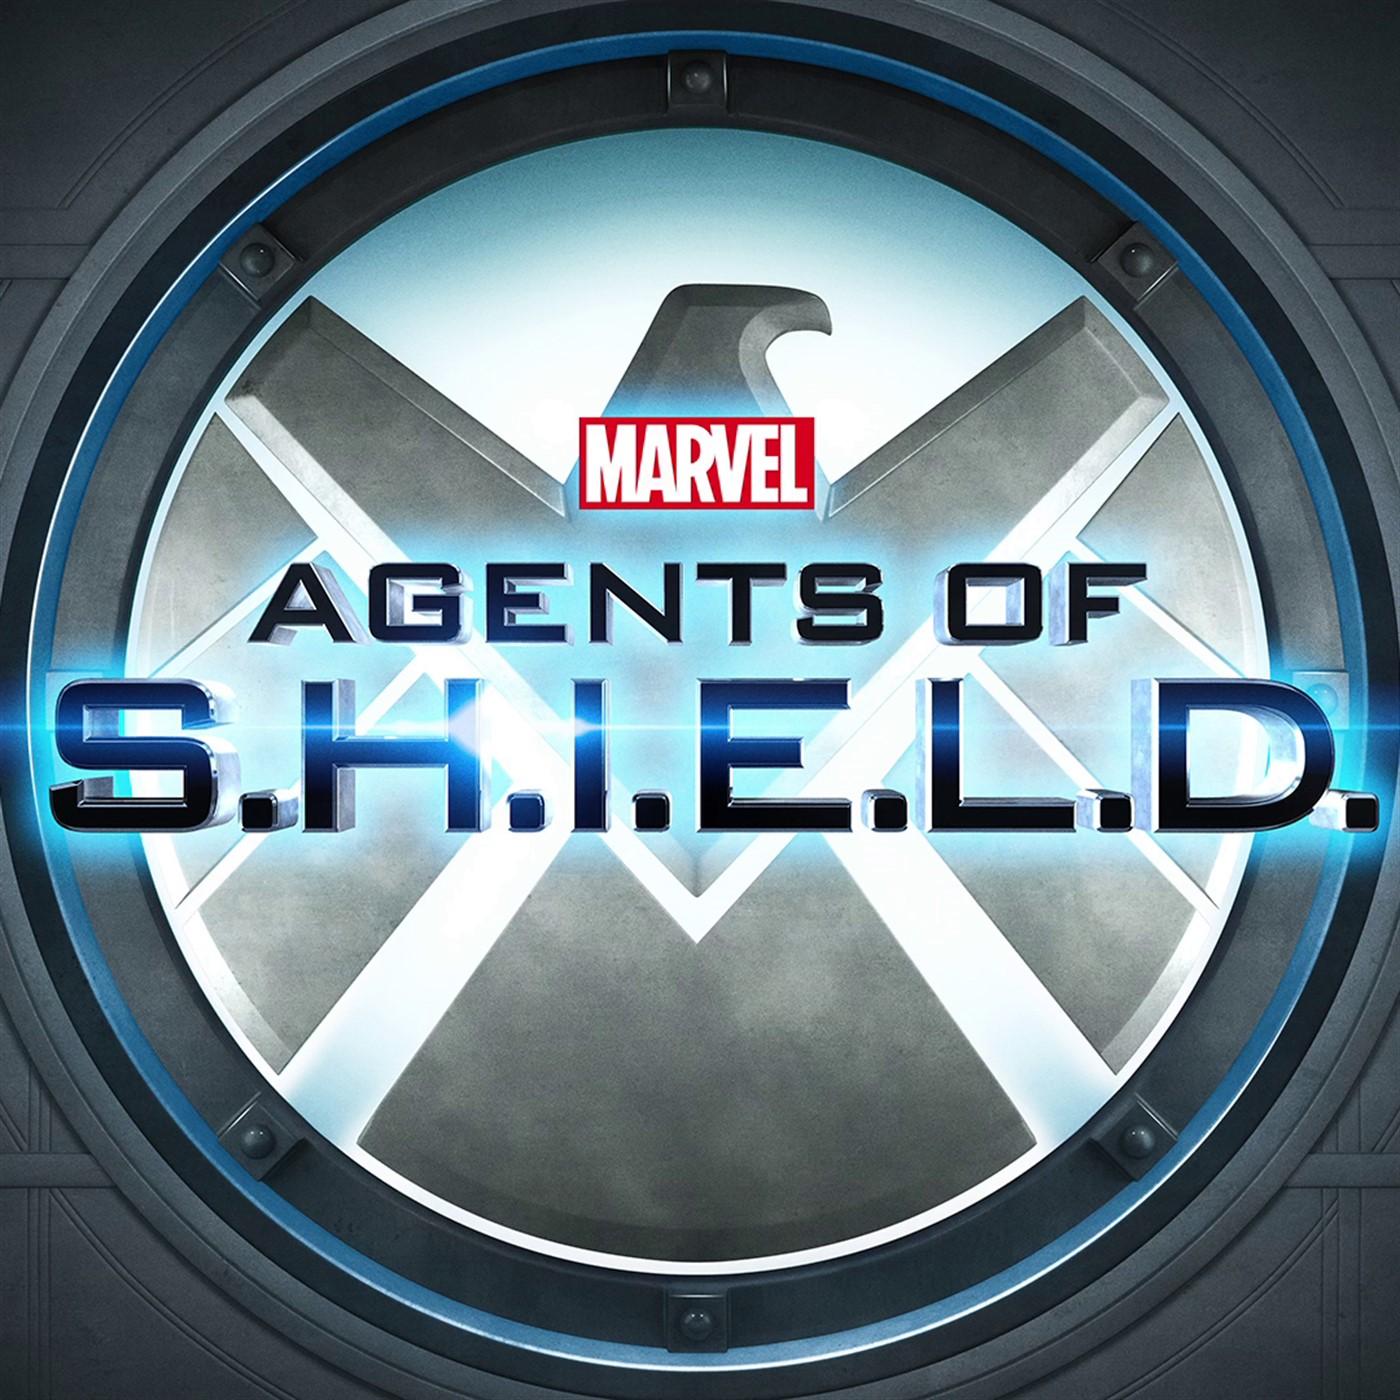 Marvel's Agents of SHIELD - Season 5 (So Far)